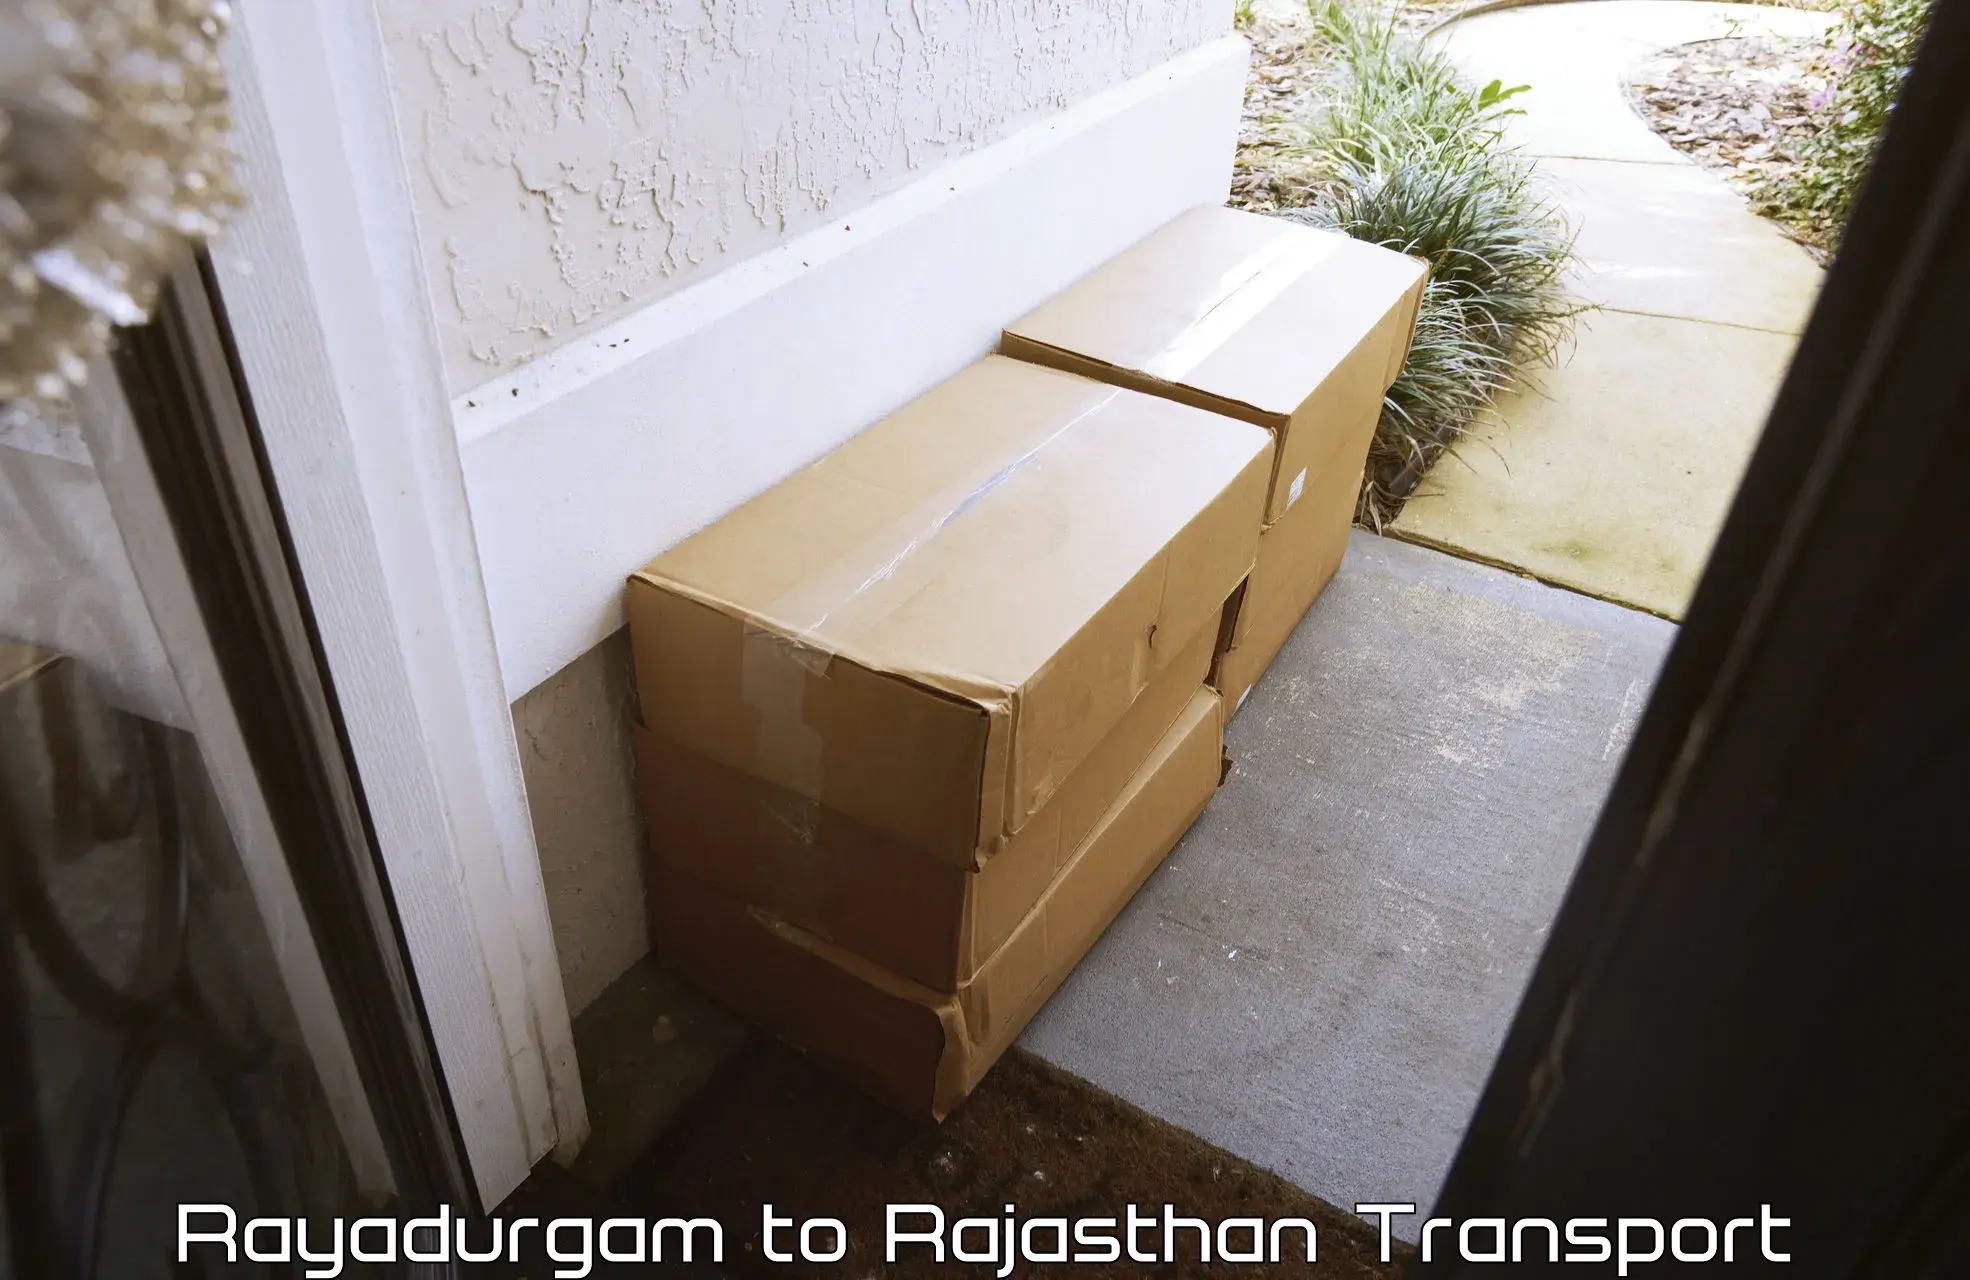 Air freight transport services Rayadurgam to Raila